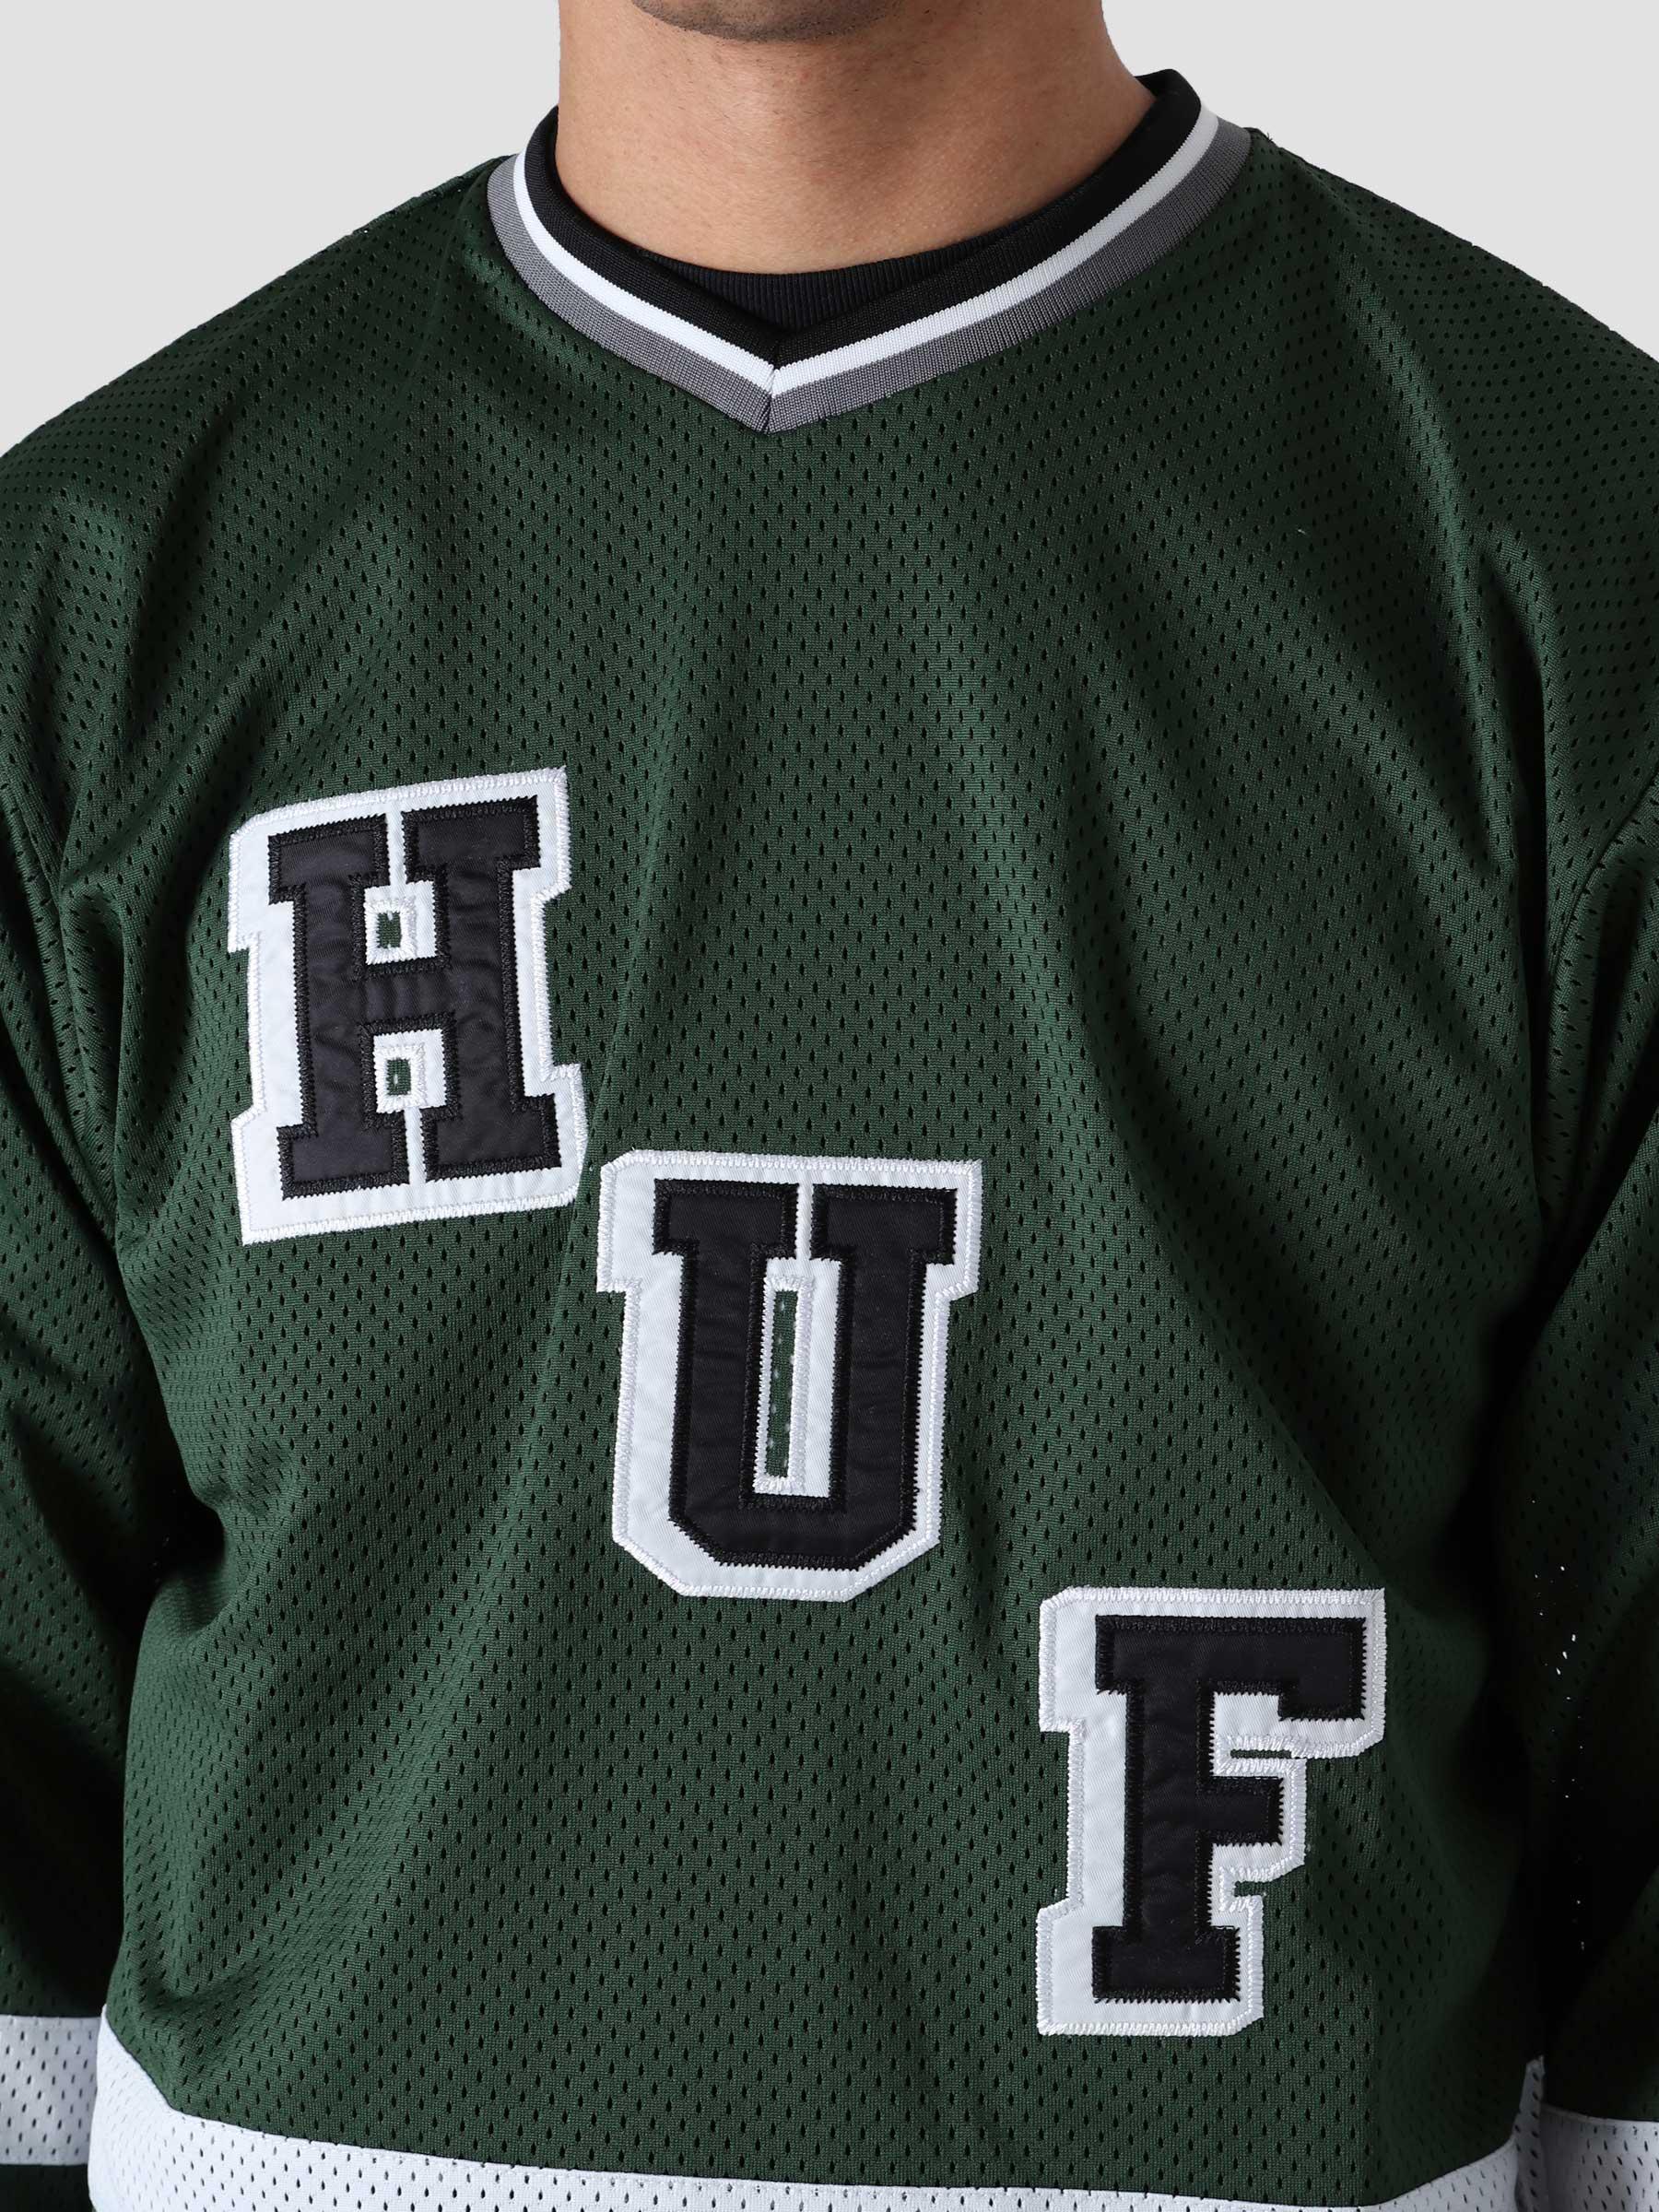 Huf H Stardust Hockey Jersey | Large